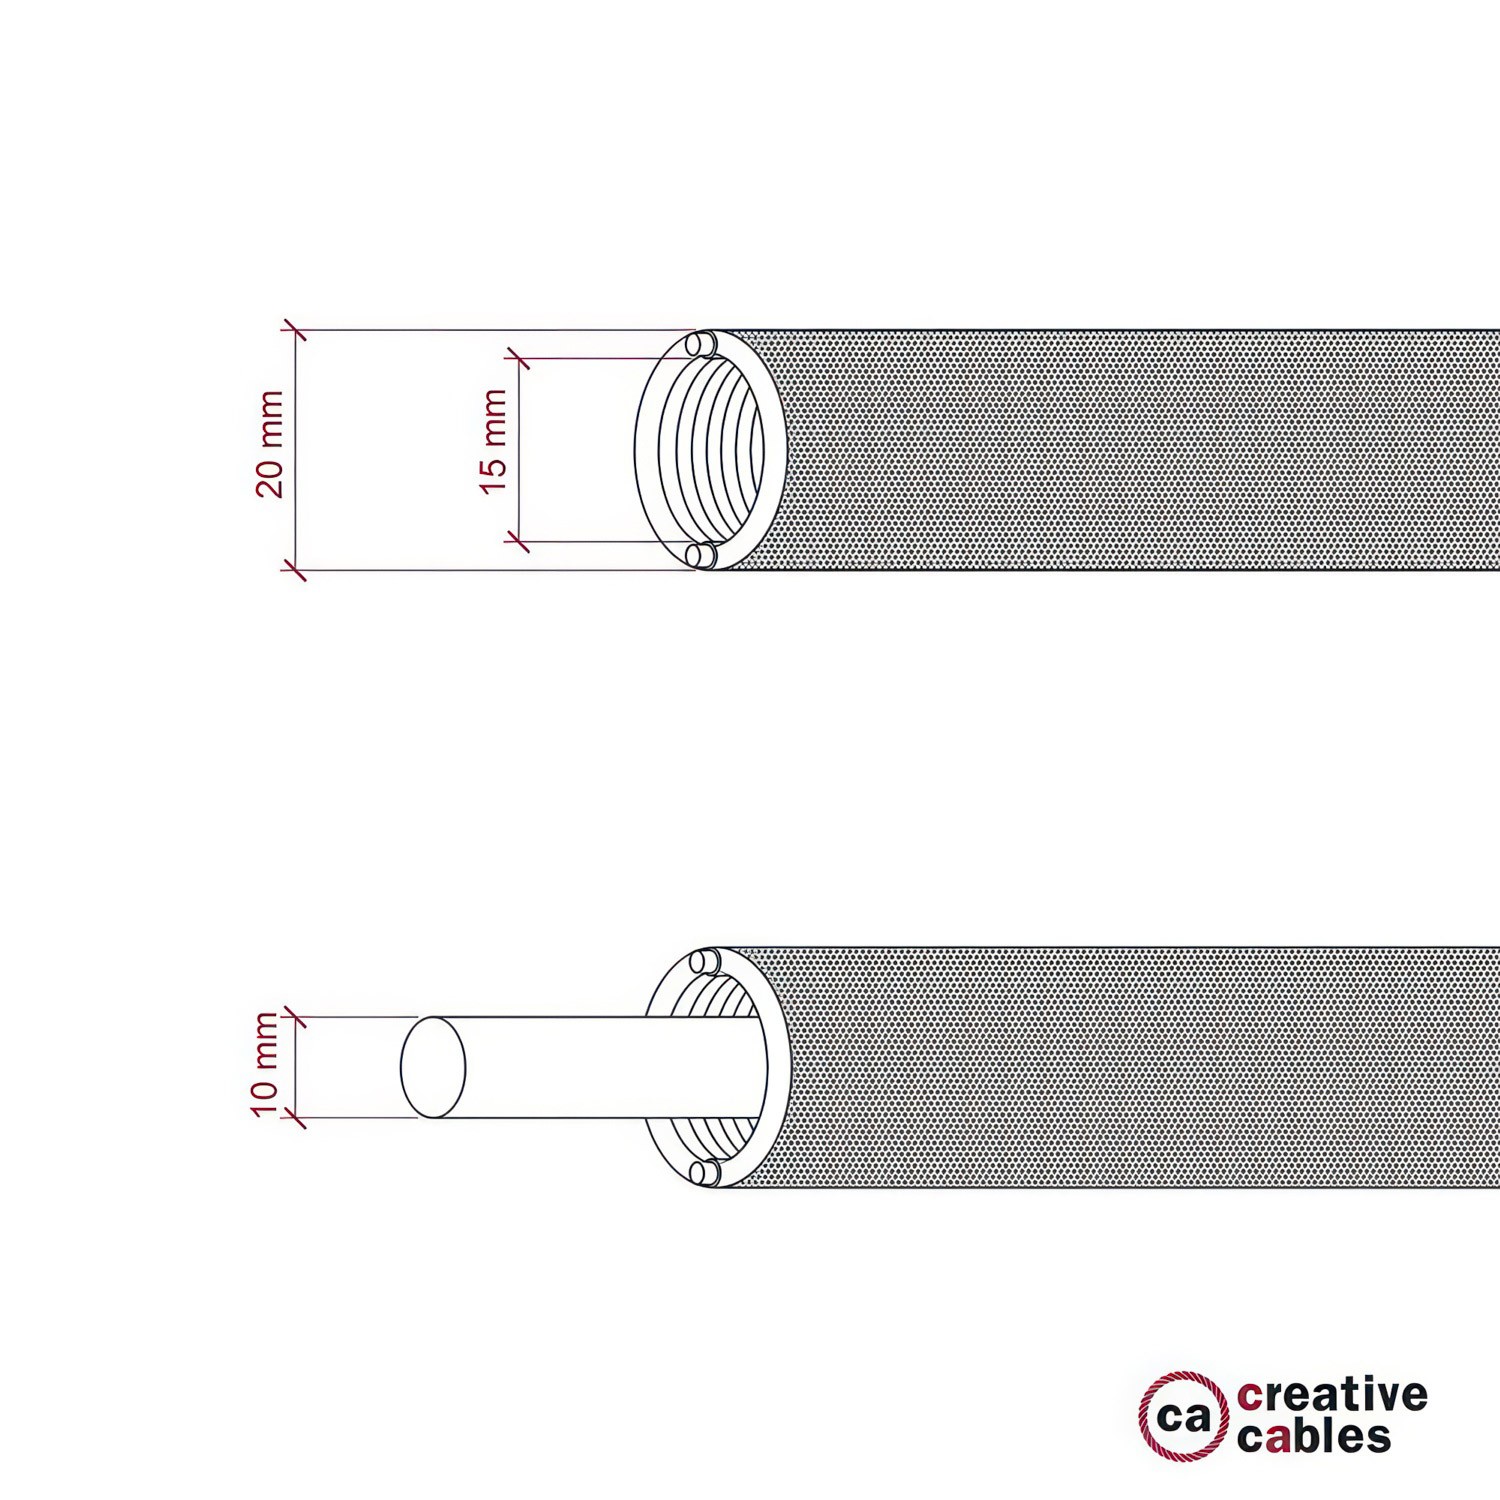 Creative-Tube fleksibel rørledning, Viskose Rød RM09 stofbeklædt, diameter 20 mm